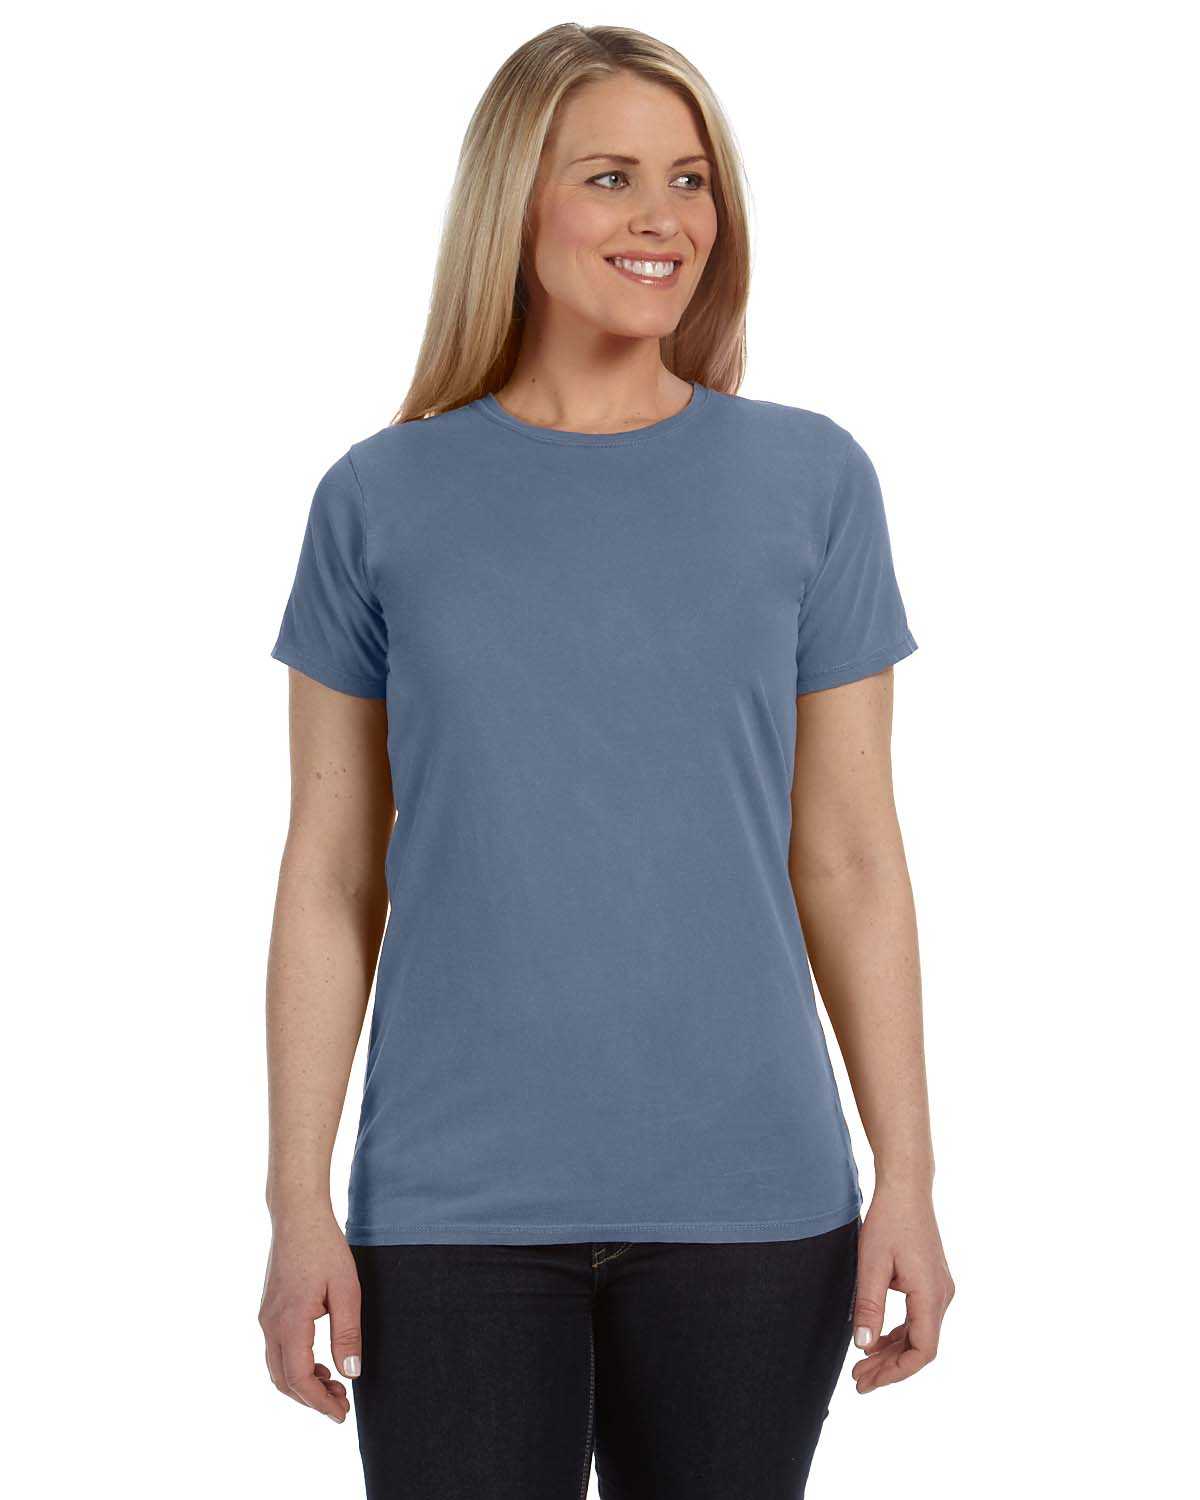 Comfort Colors C4200 Ladies' 4.8 oz. Fitted T-Shirt | ApparelChoice.com